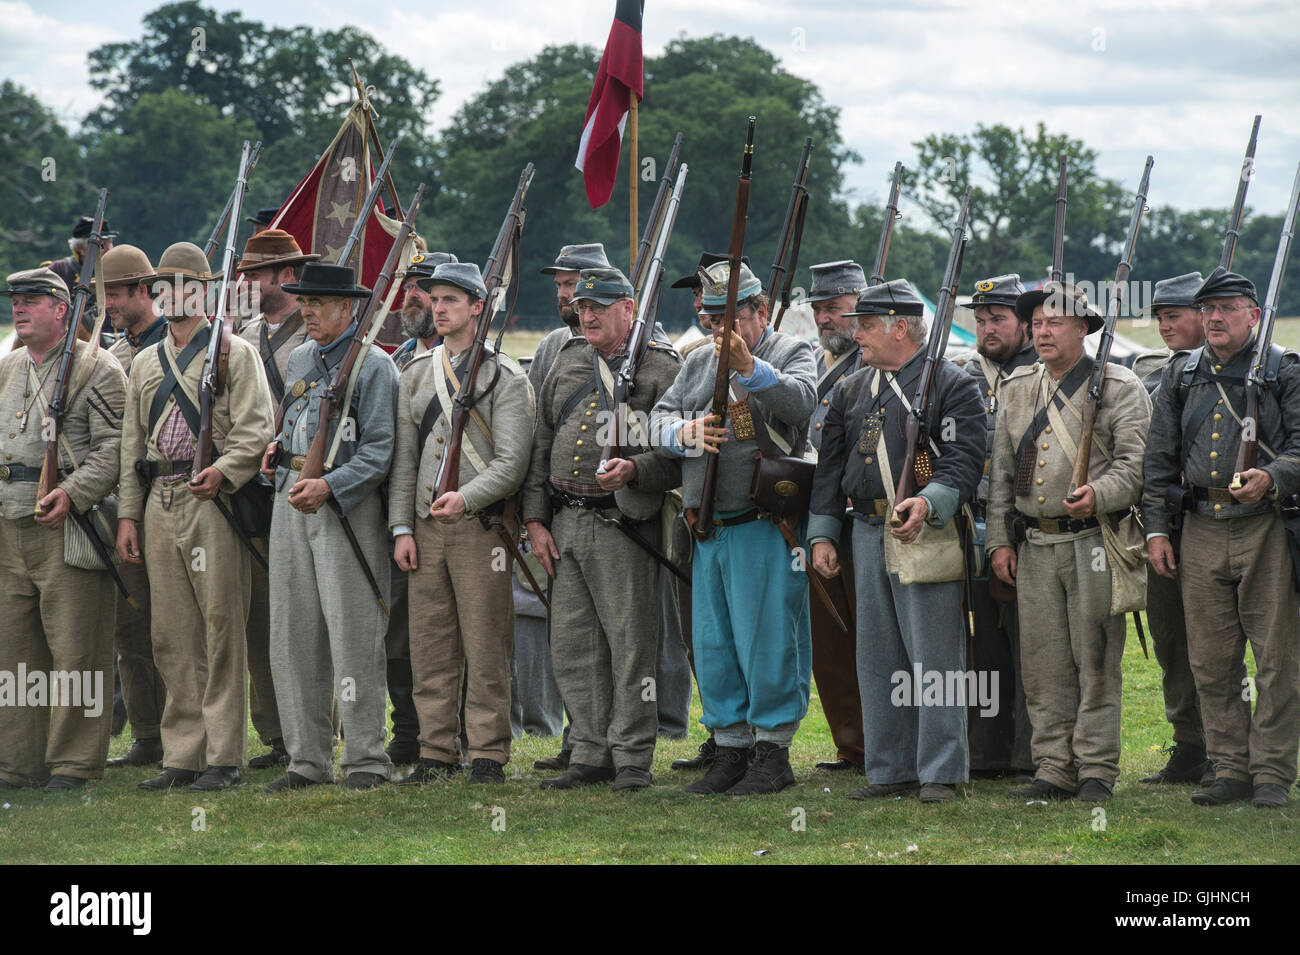 Civil War Confederate Soldiers Uniforms